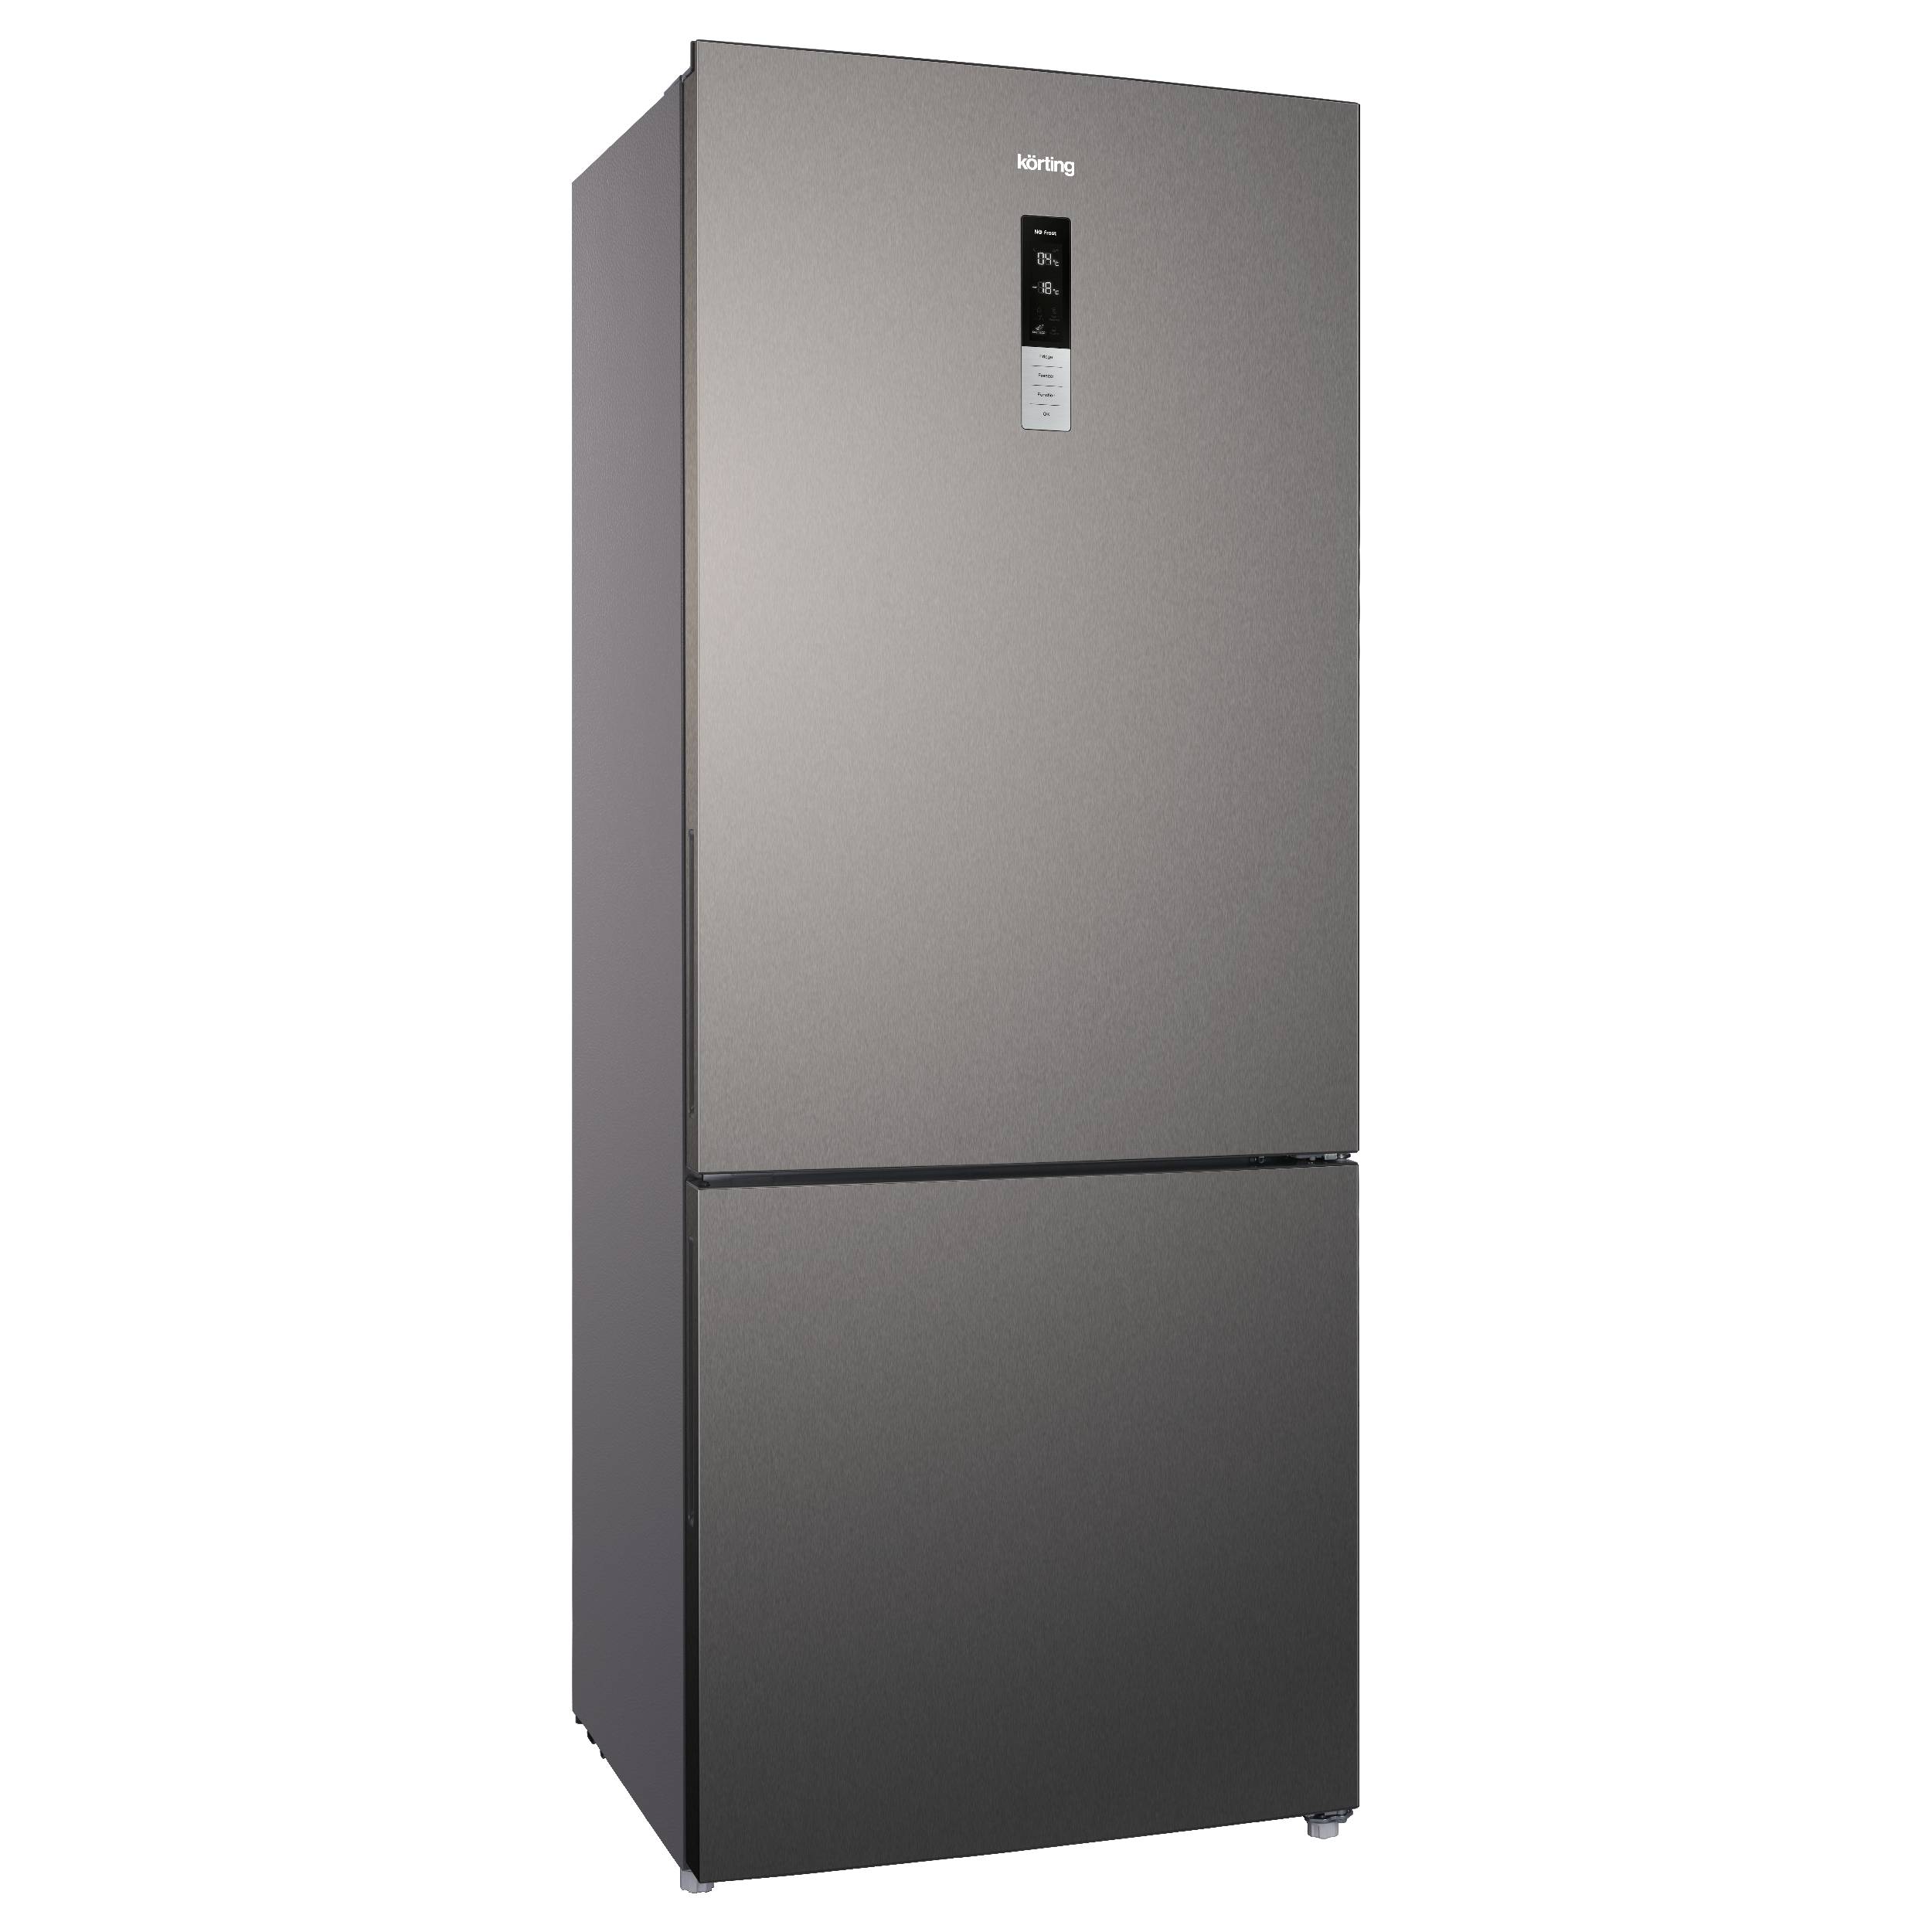 Холодильник Korting KNFC 72337 X серебристый, серый шоковая заморозка при v камеры 30 99 м